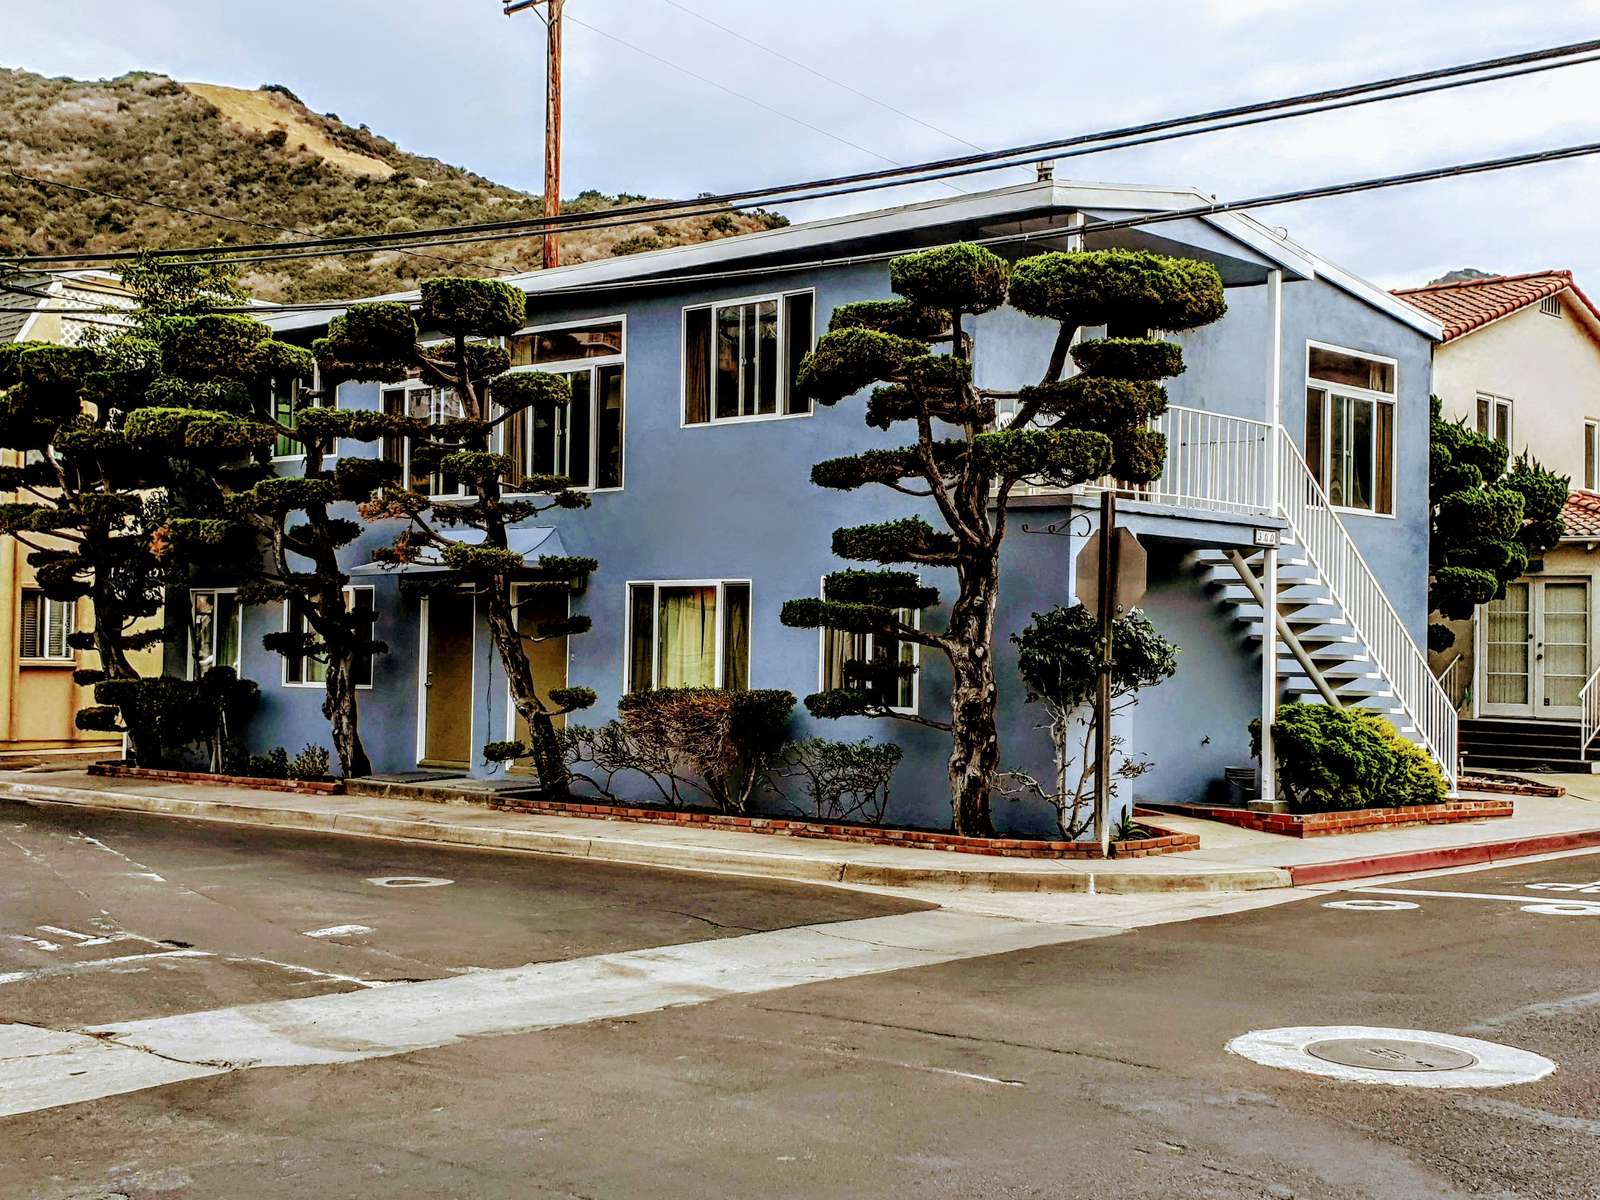 Wyspa Santa Catalina, Kalifornia, USA puzzle online